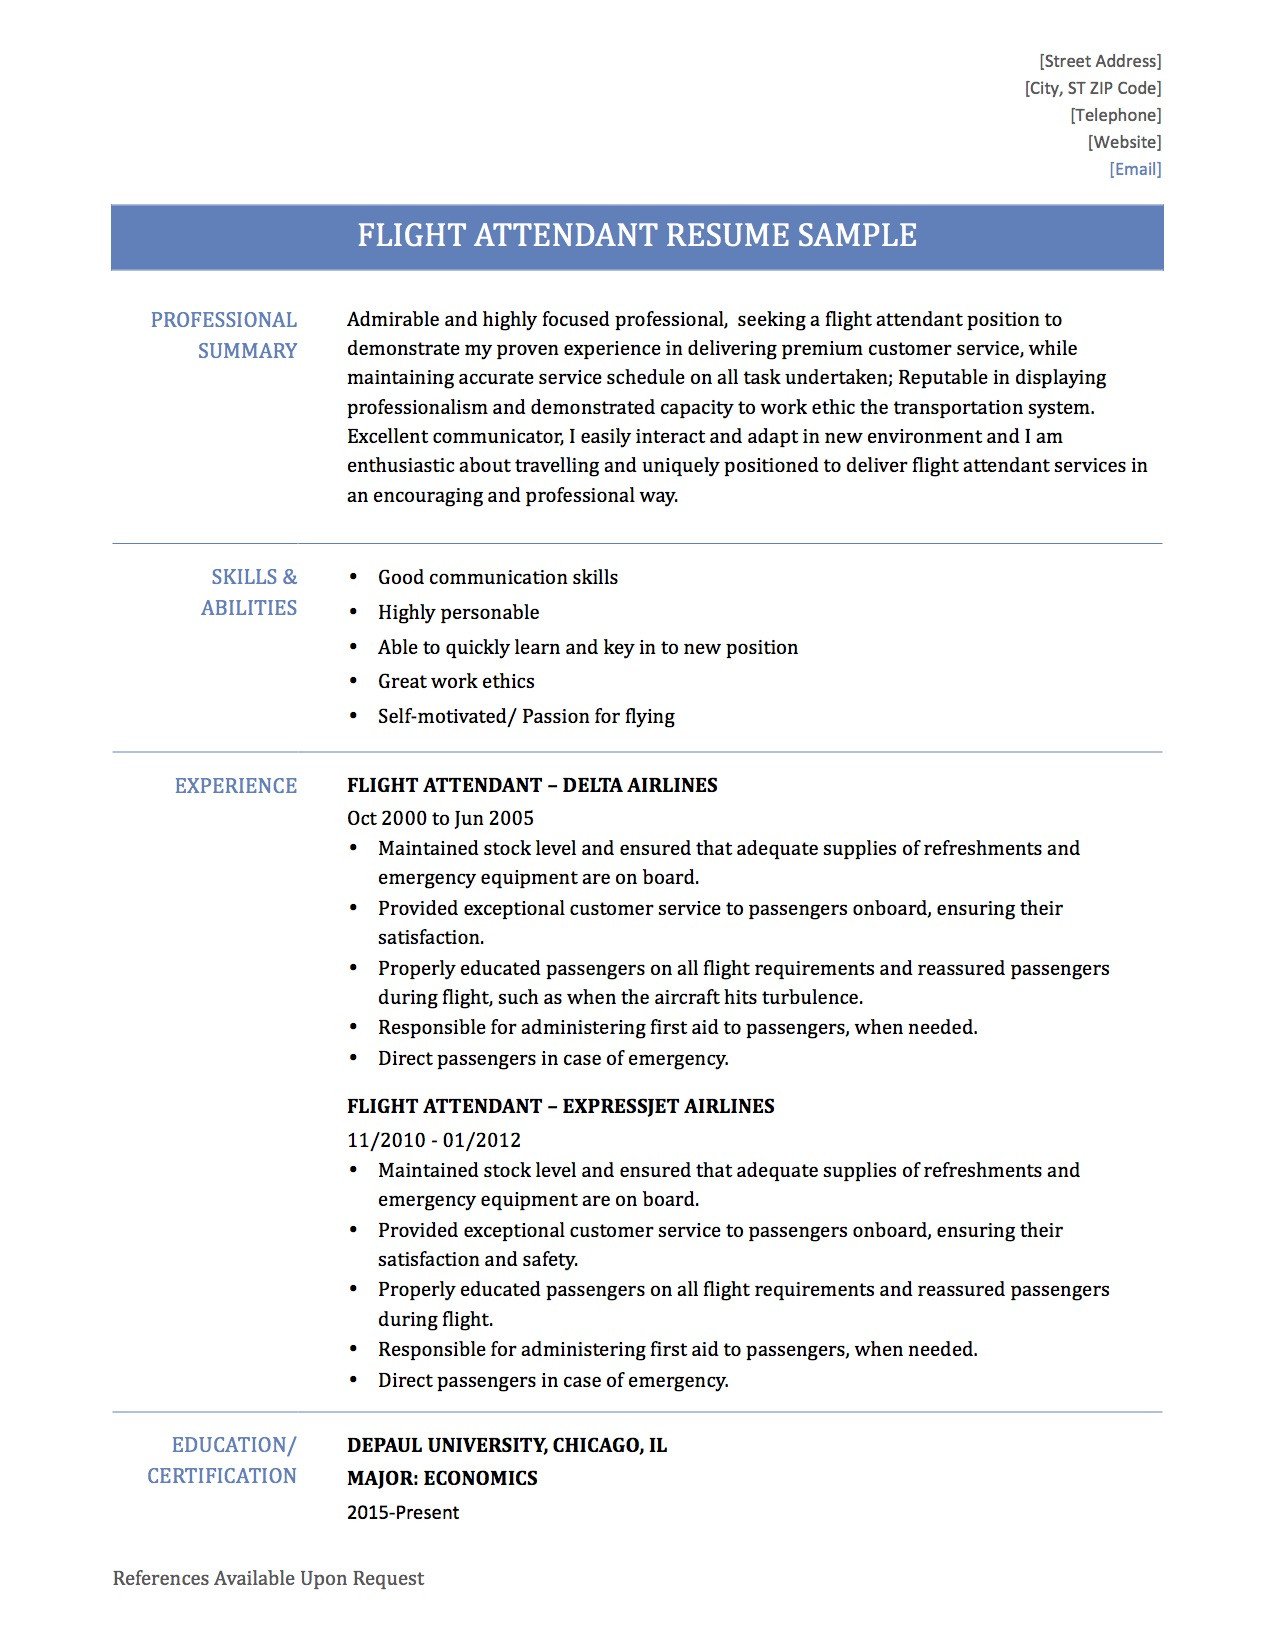 Sample Resume For Flight Attendant Position Resume Ideas